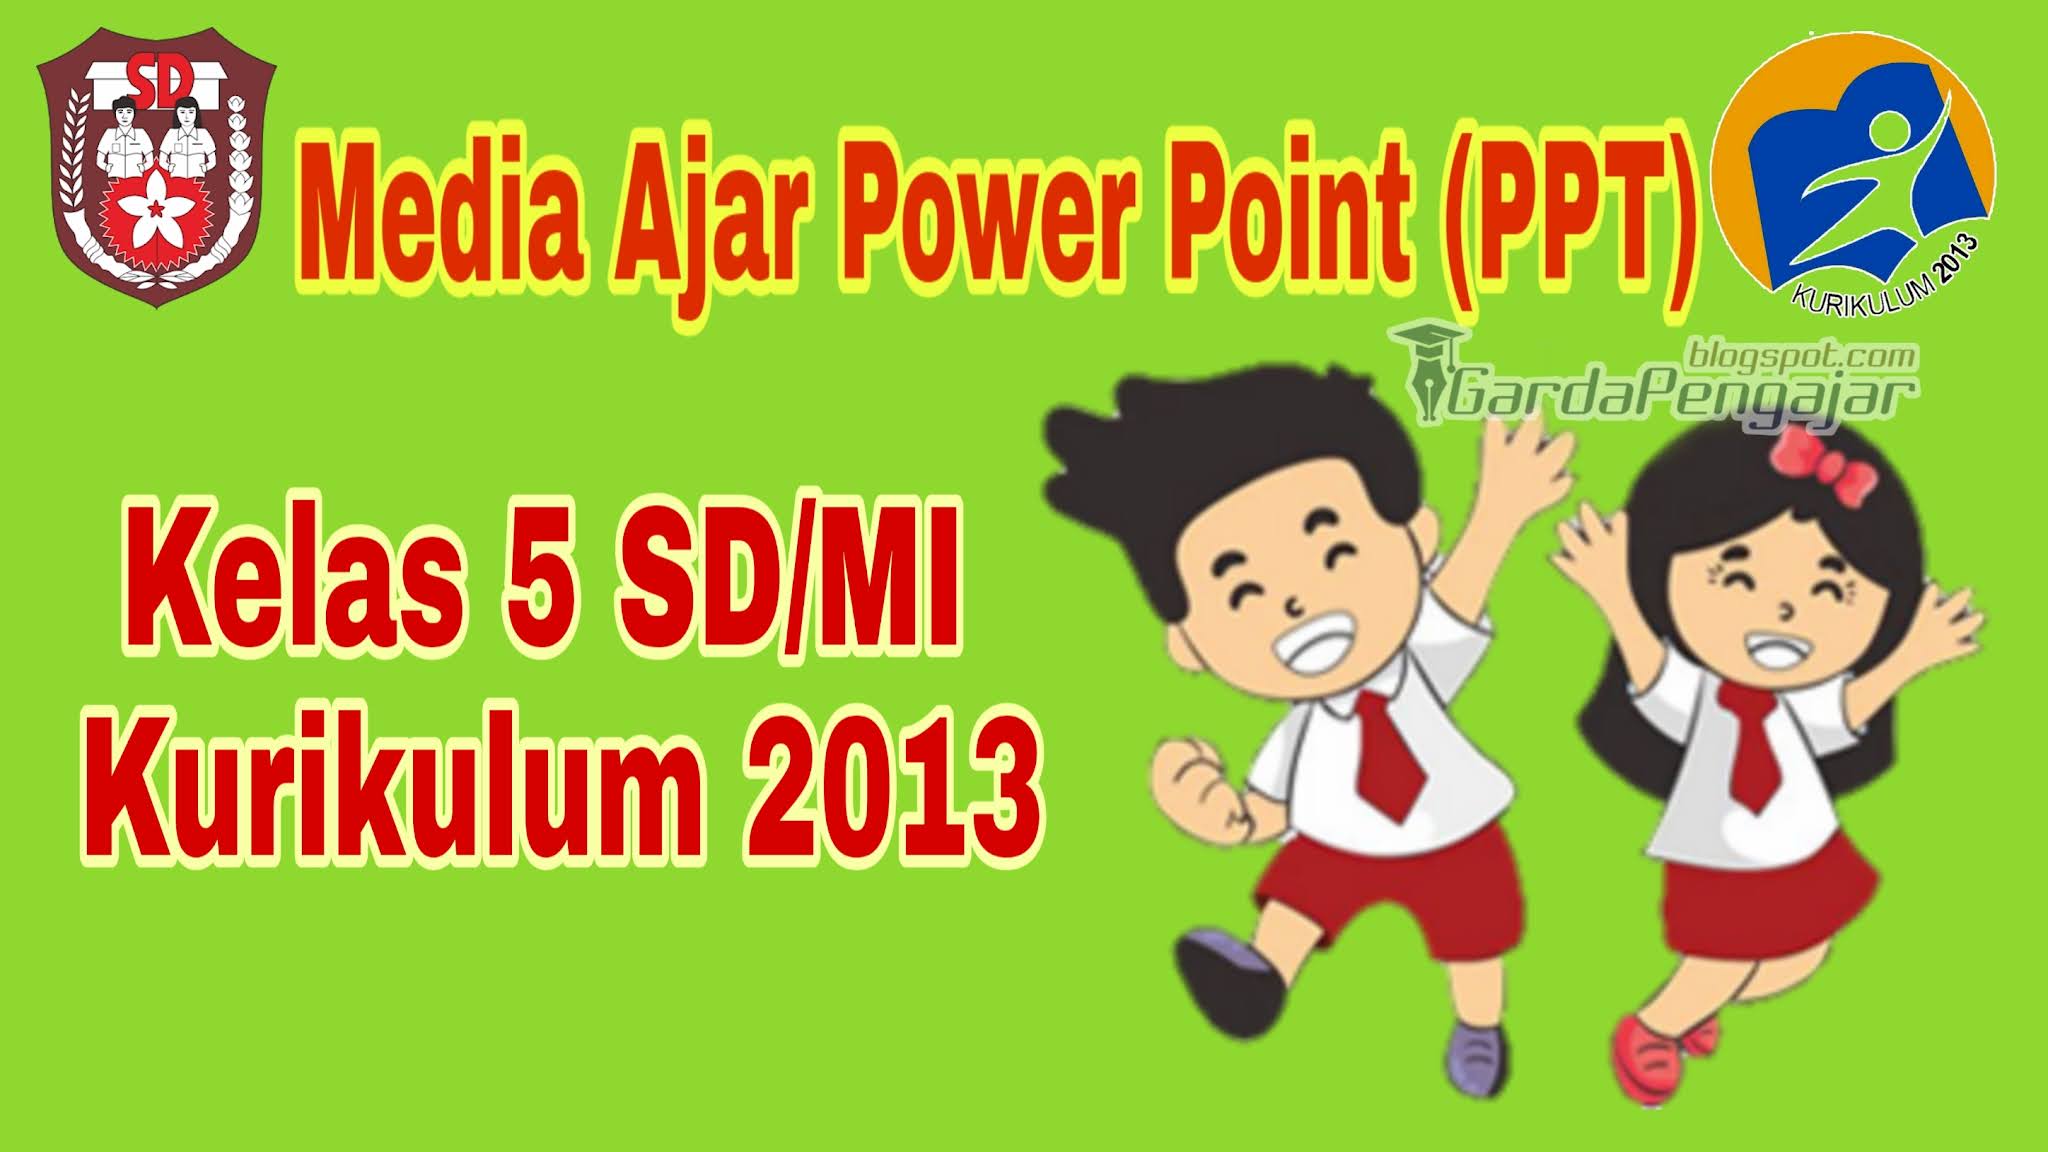 Unduh Media Ajar Power Point (PPT) Kelas 5 SD/MI Kurikulum 2013 Garda